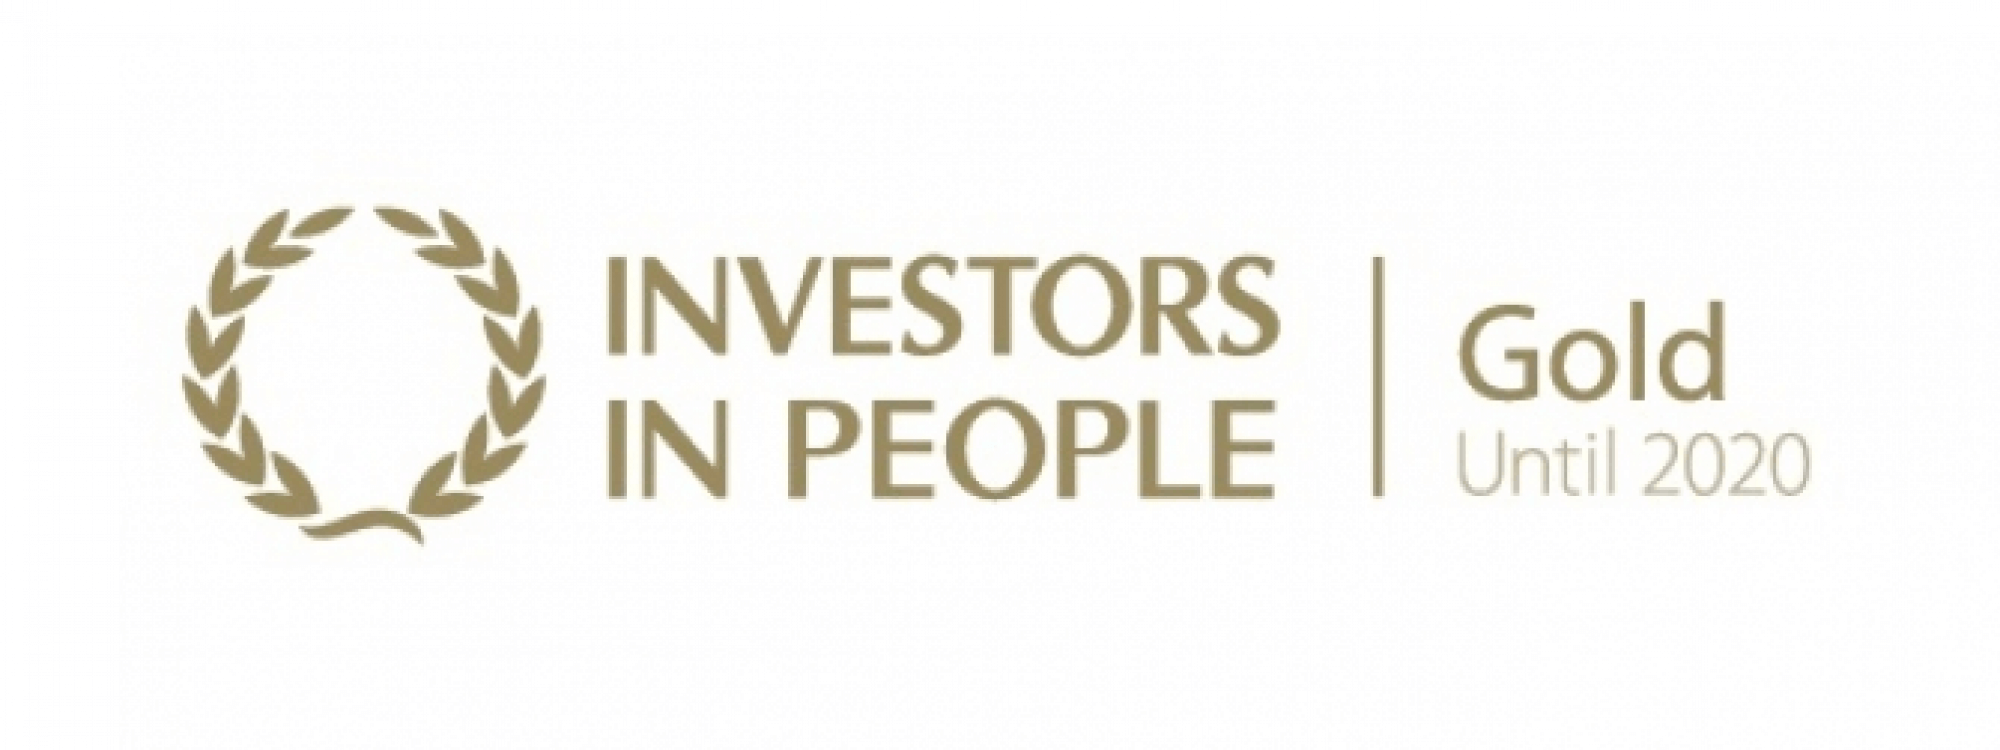 Scott Bader UK Awarded Coveted Gold Investors In People Award